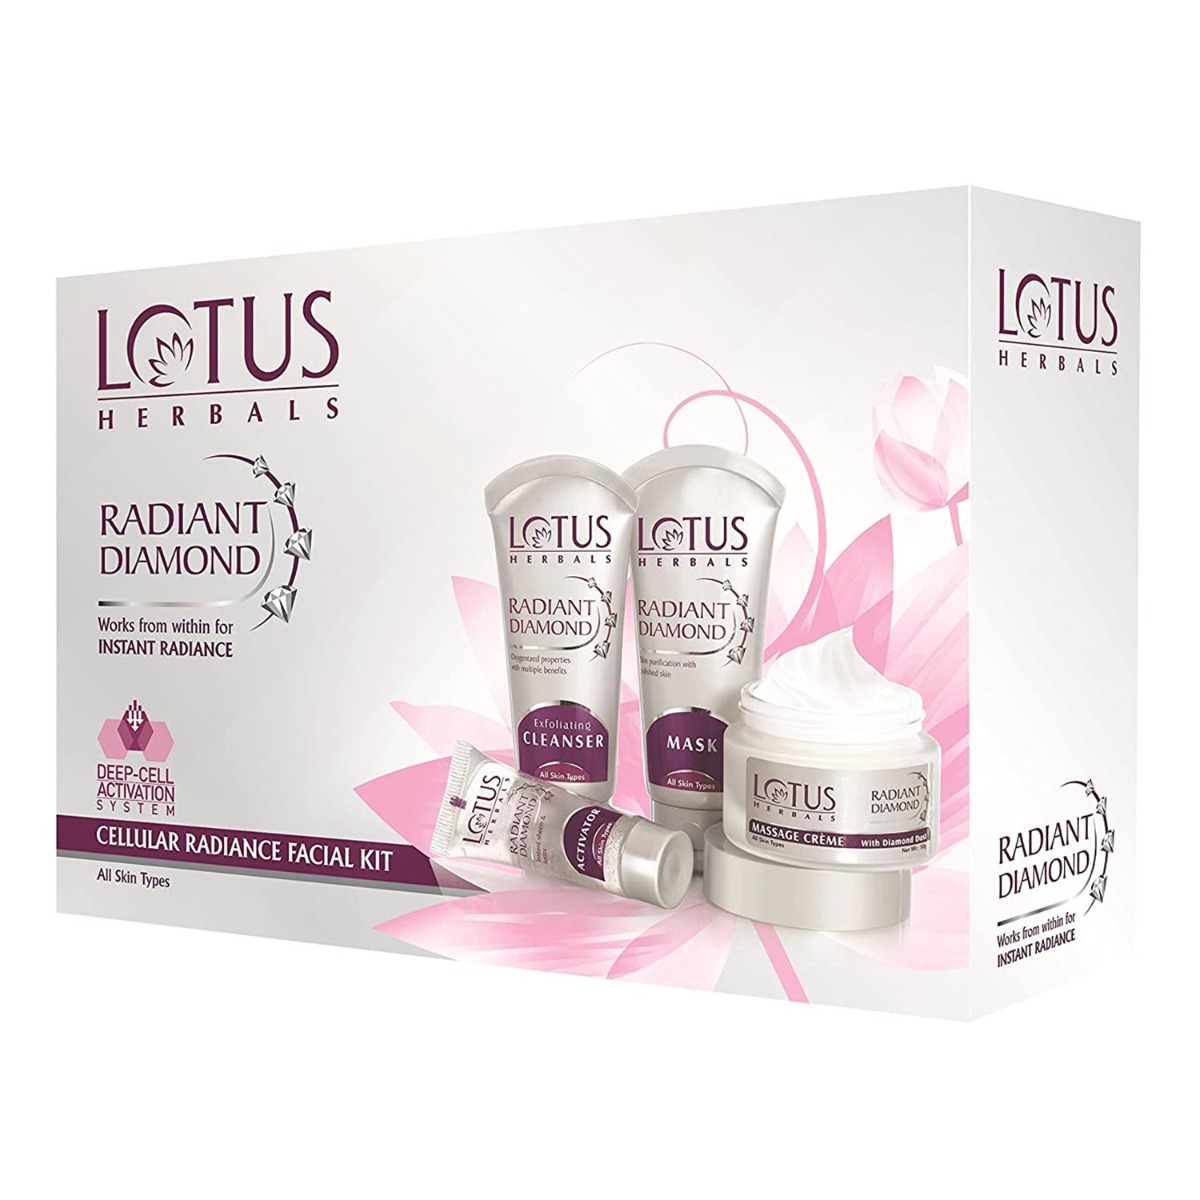 Lotus Herbals Radiant Diamond Cellular Radiance 4 In 1 Facial Kit, 170gm